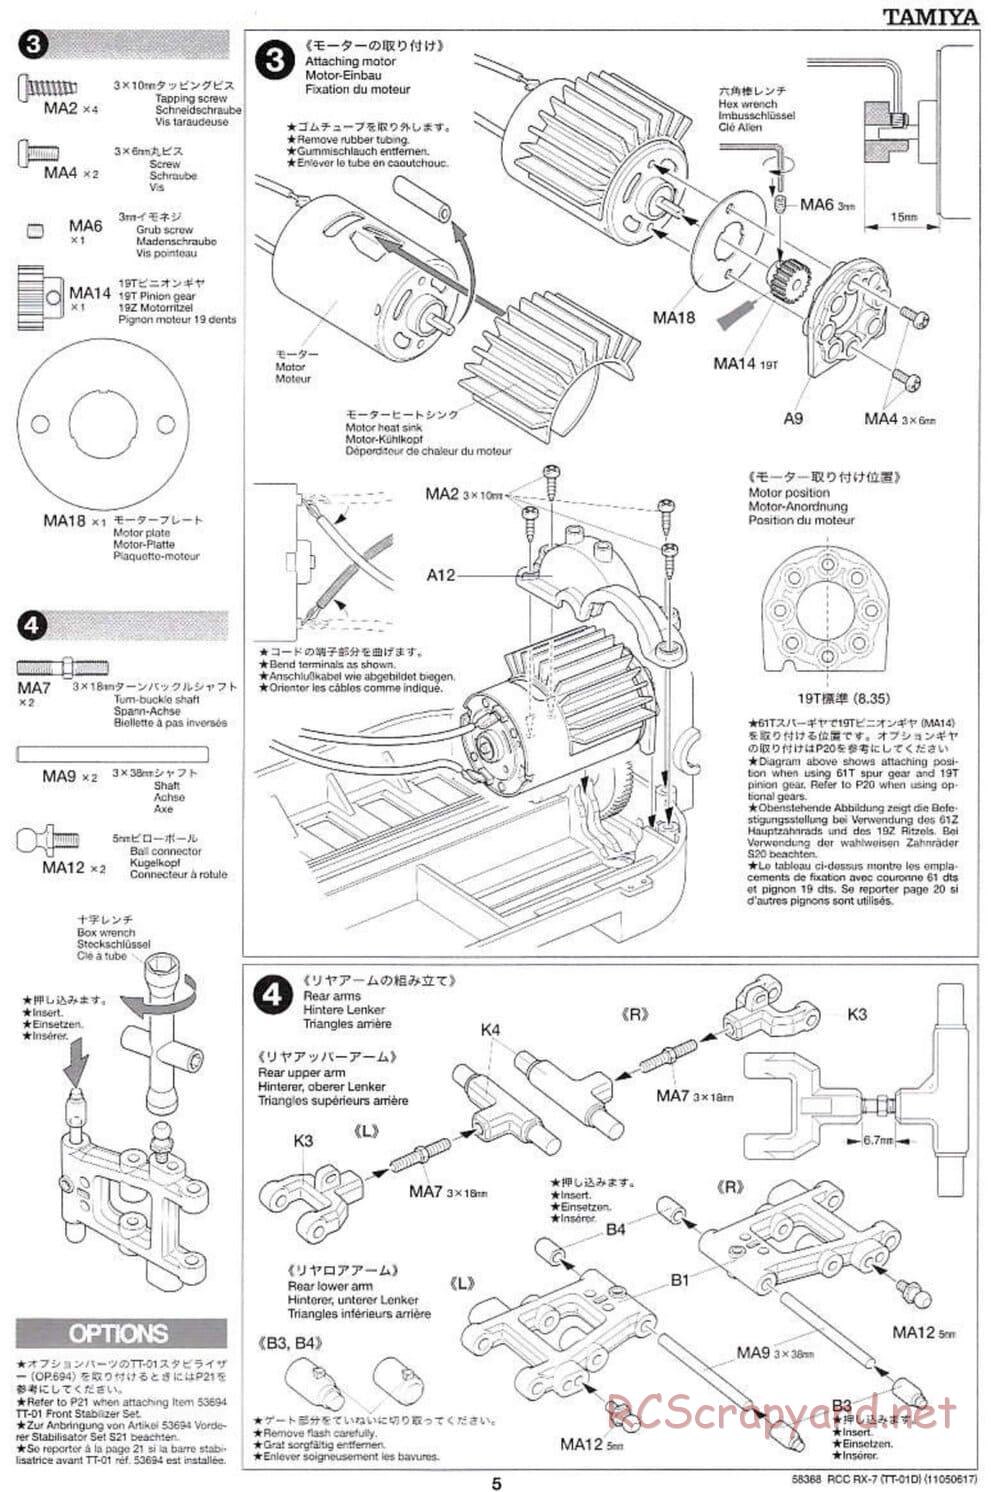 Tamiya - Mazda RX-7 - Drift Spec - TT-01D Chassis - Manual - Page 5